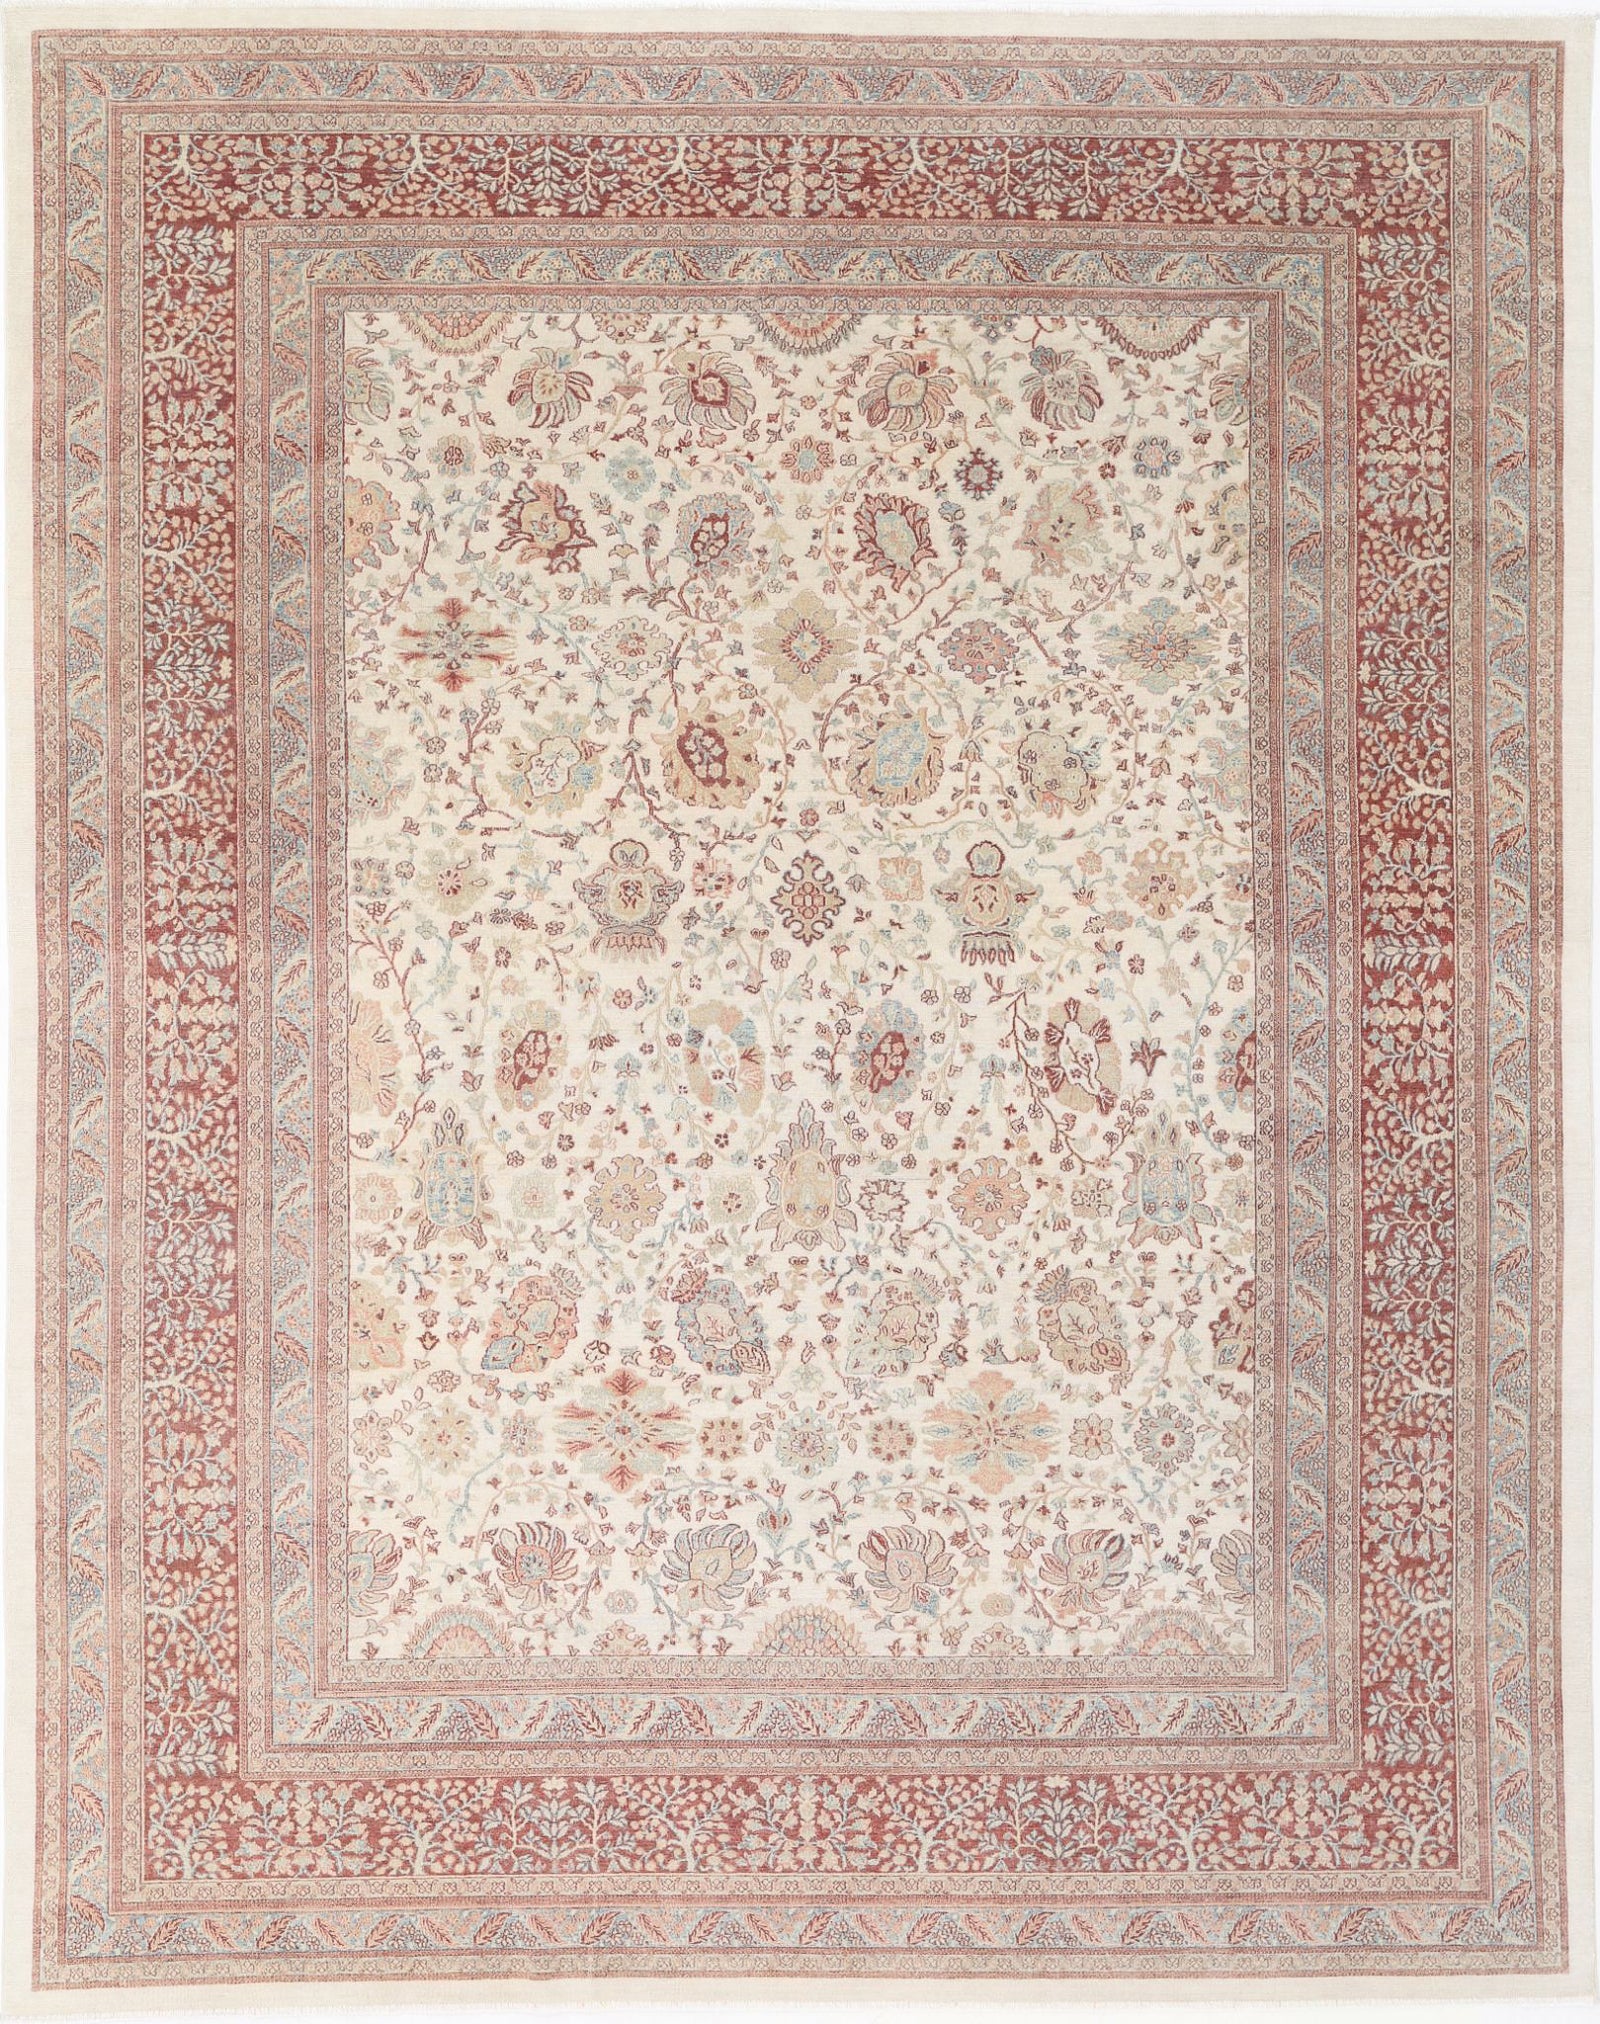 Samsun-hand-knotted-haji-jalili-wool-rug-5021585.jpg